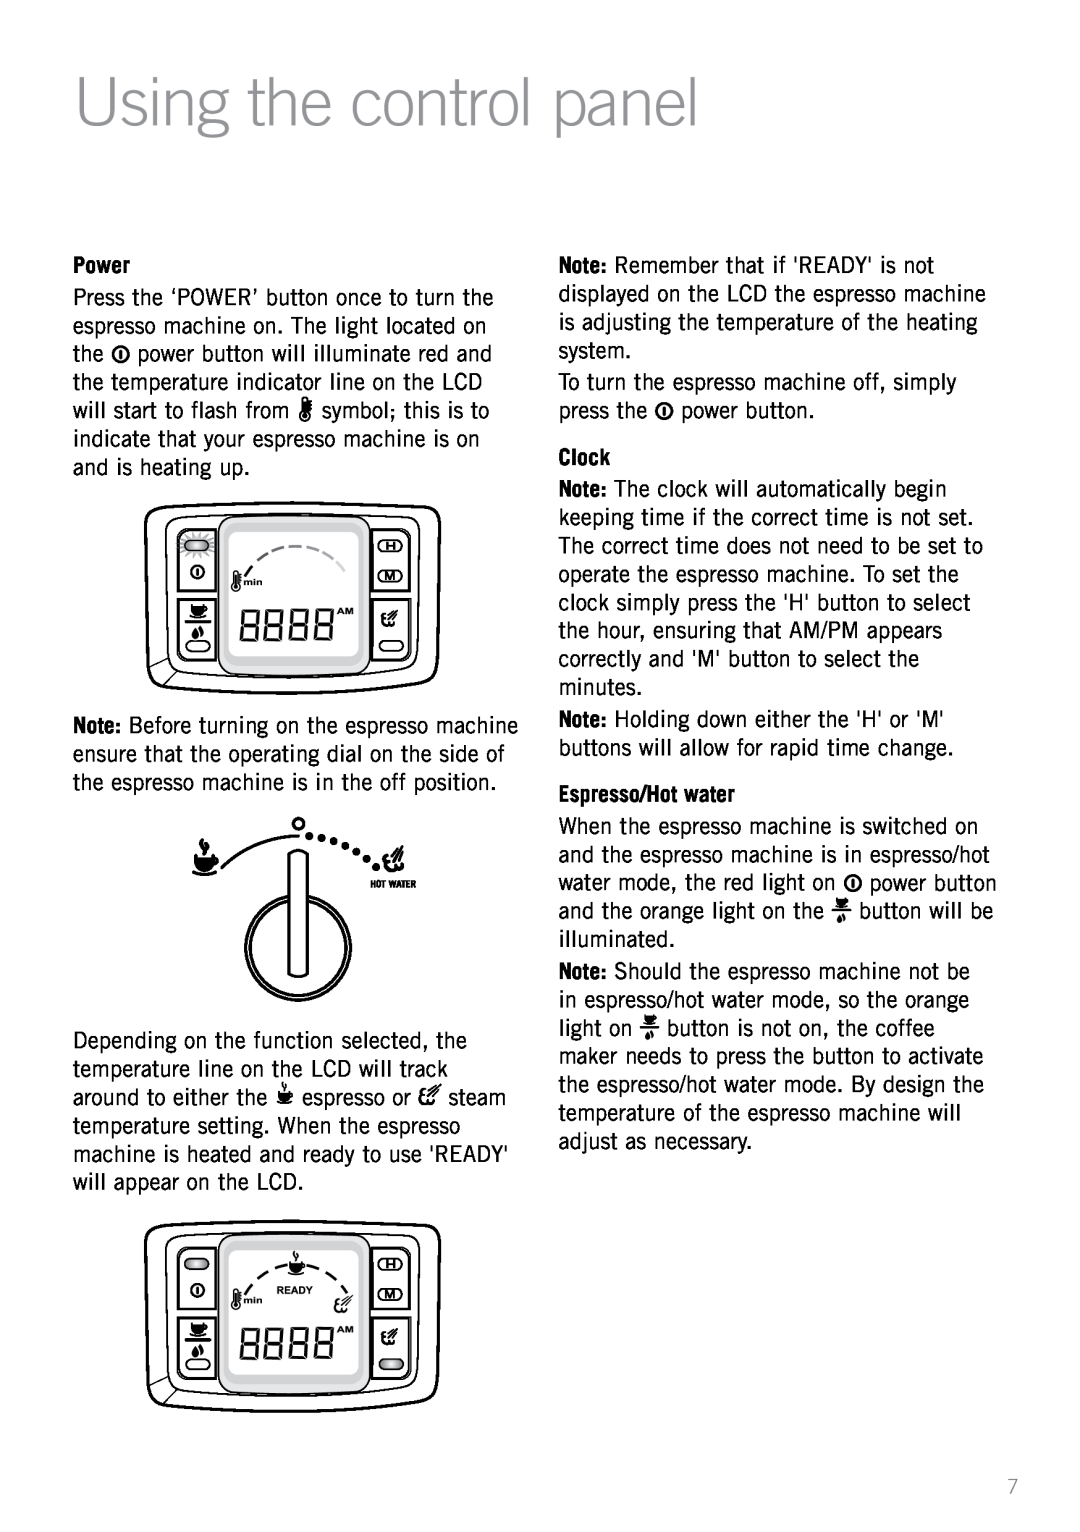 Sunbeam EM5600 manual Using the control panel, Power, Clock, Espresso/Hot water 